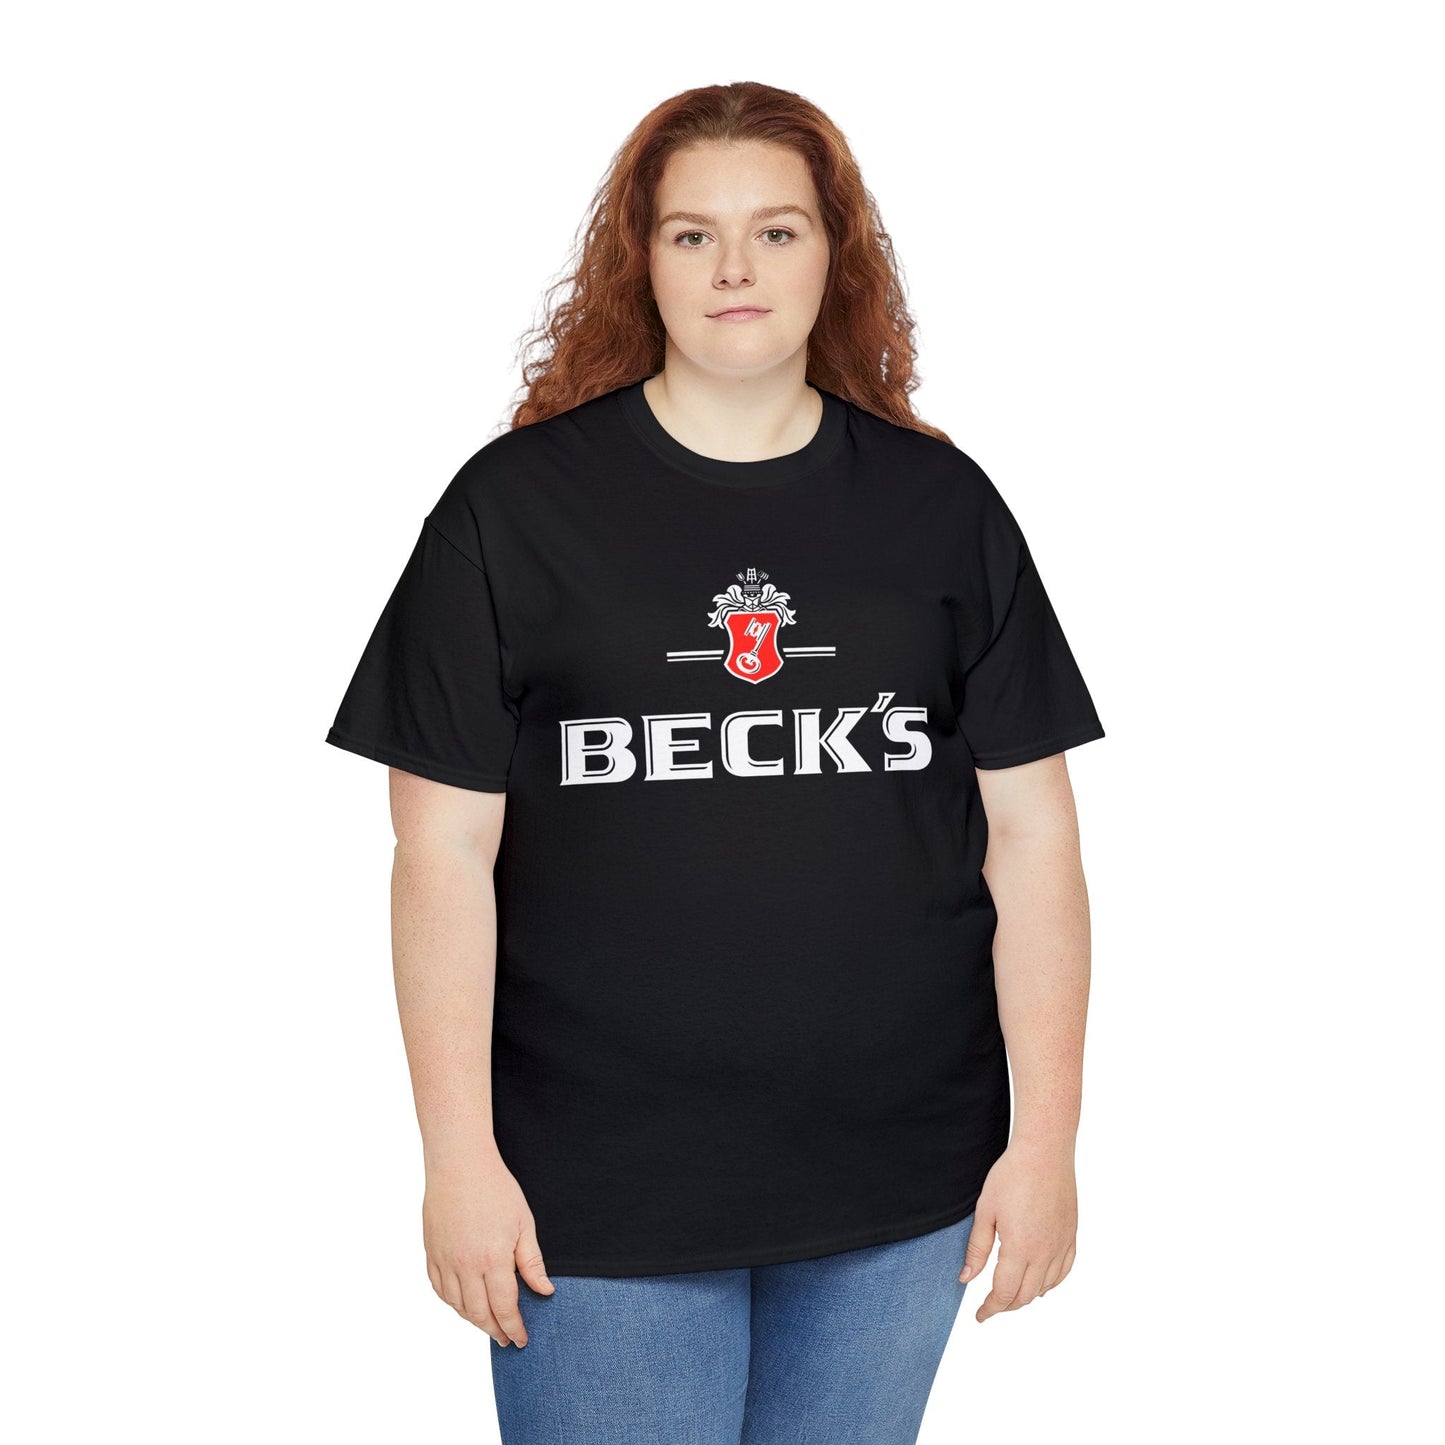 Beck's Beer Logo T-Shirt - RetroTeeShop